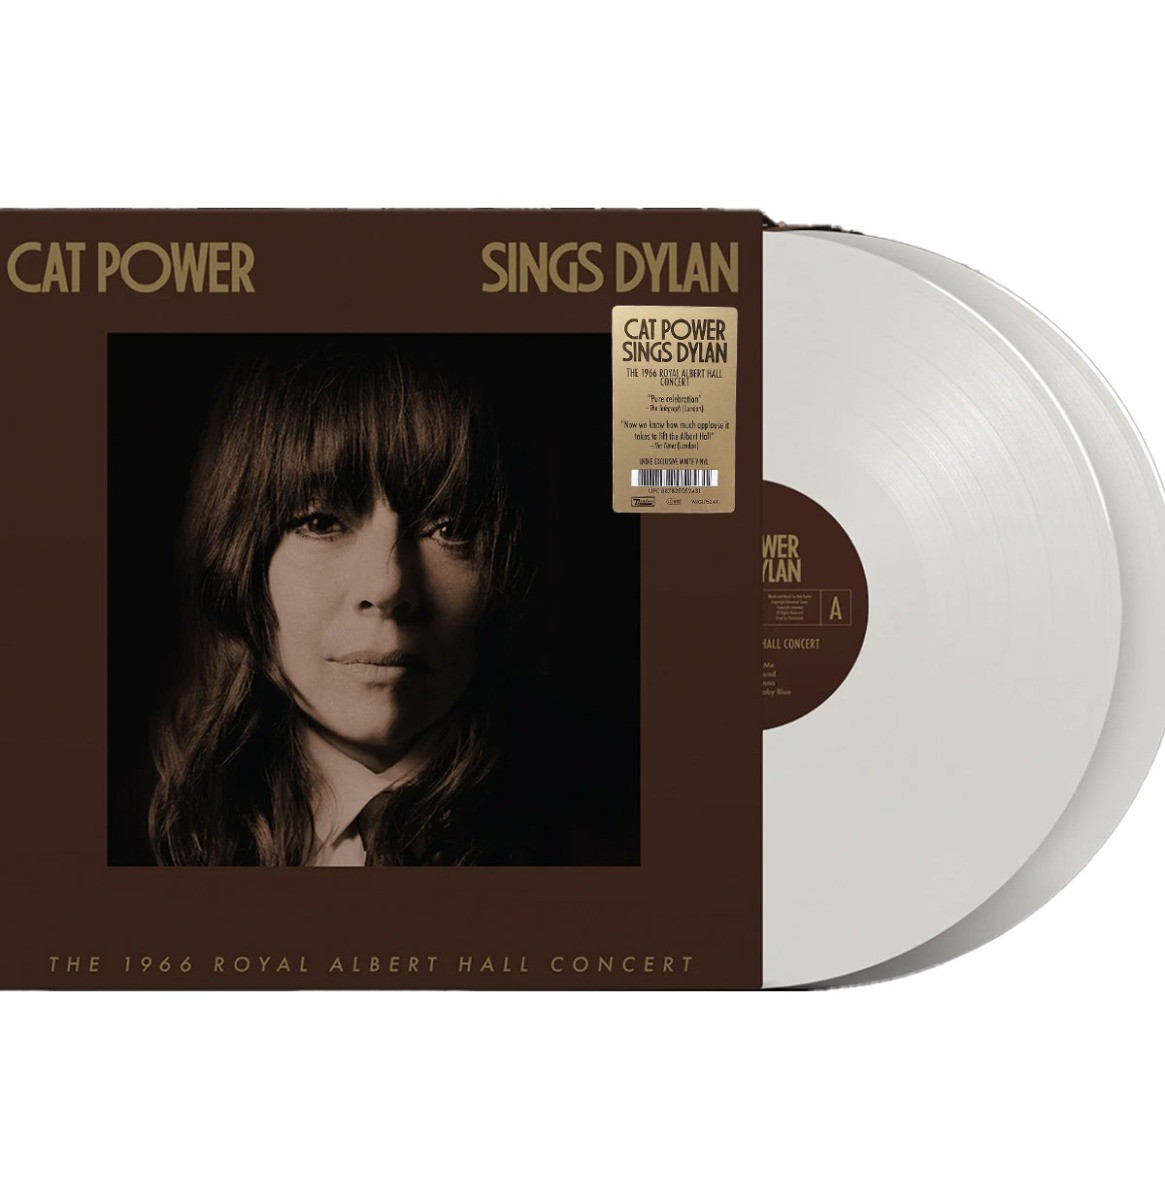 Cat Power - Sings Dylan (The 1966 Royal Albert Hall Concert) (Wit Vinyl) 2LP